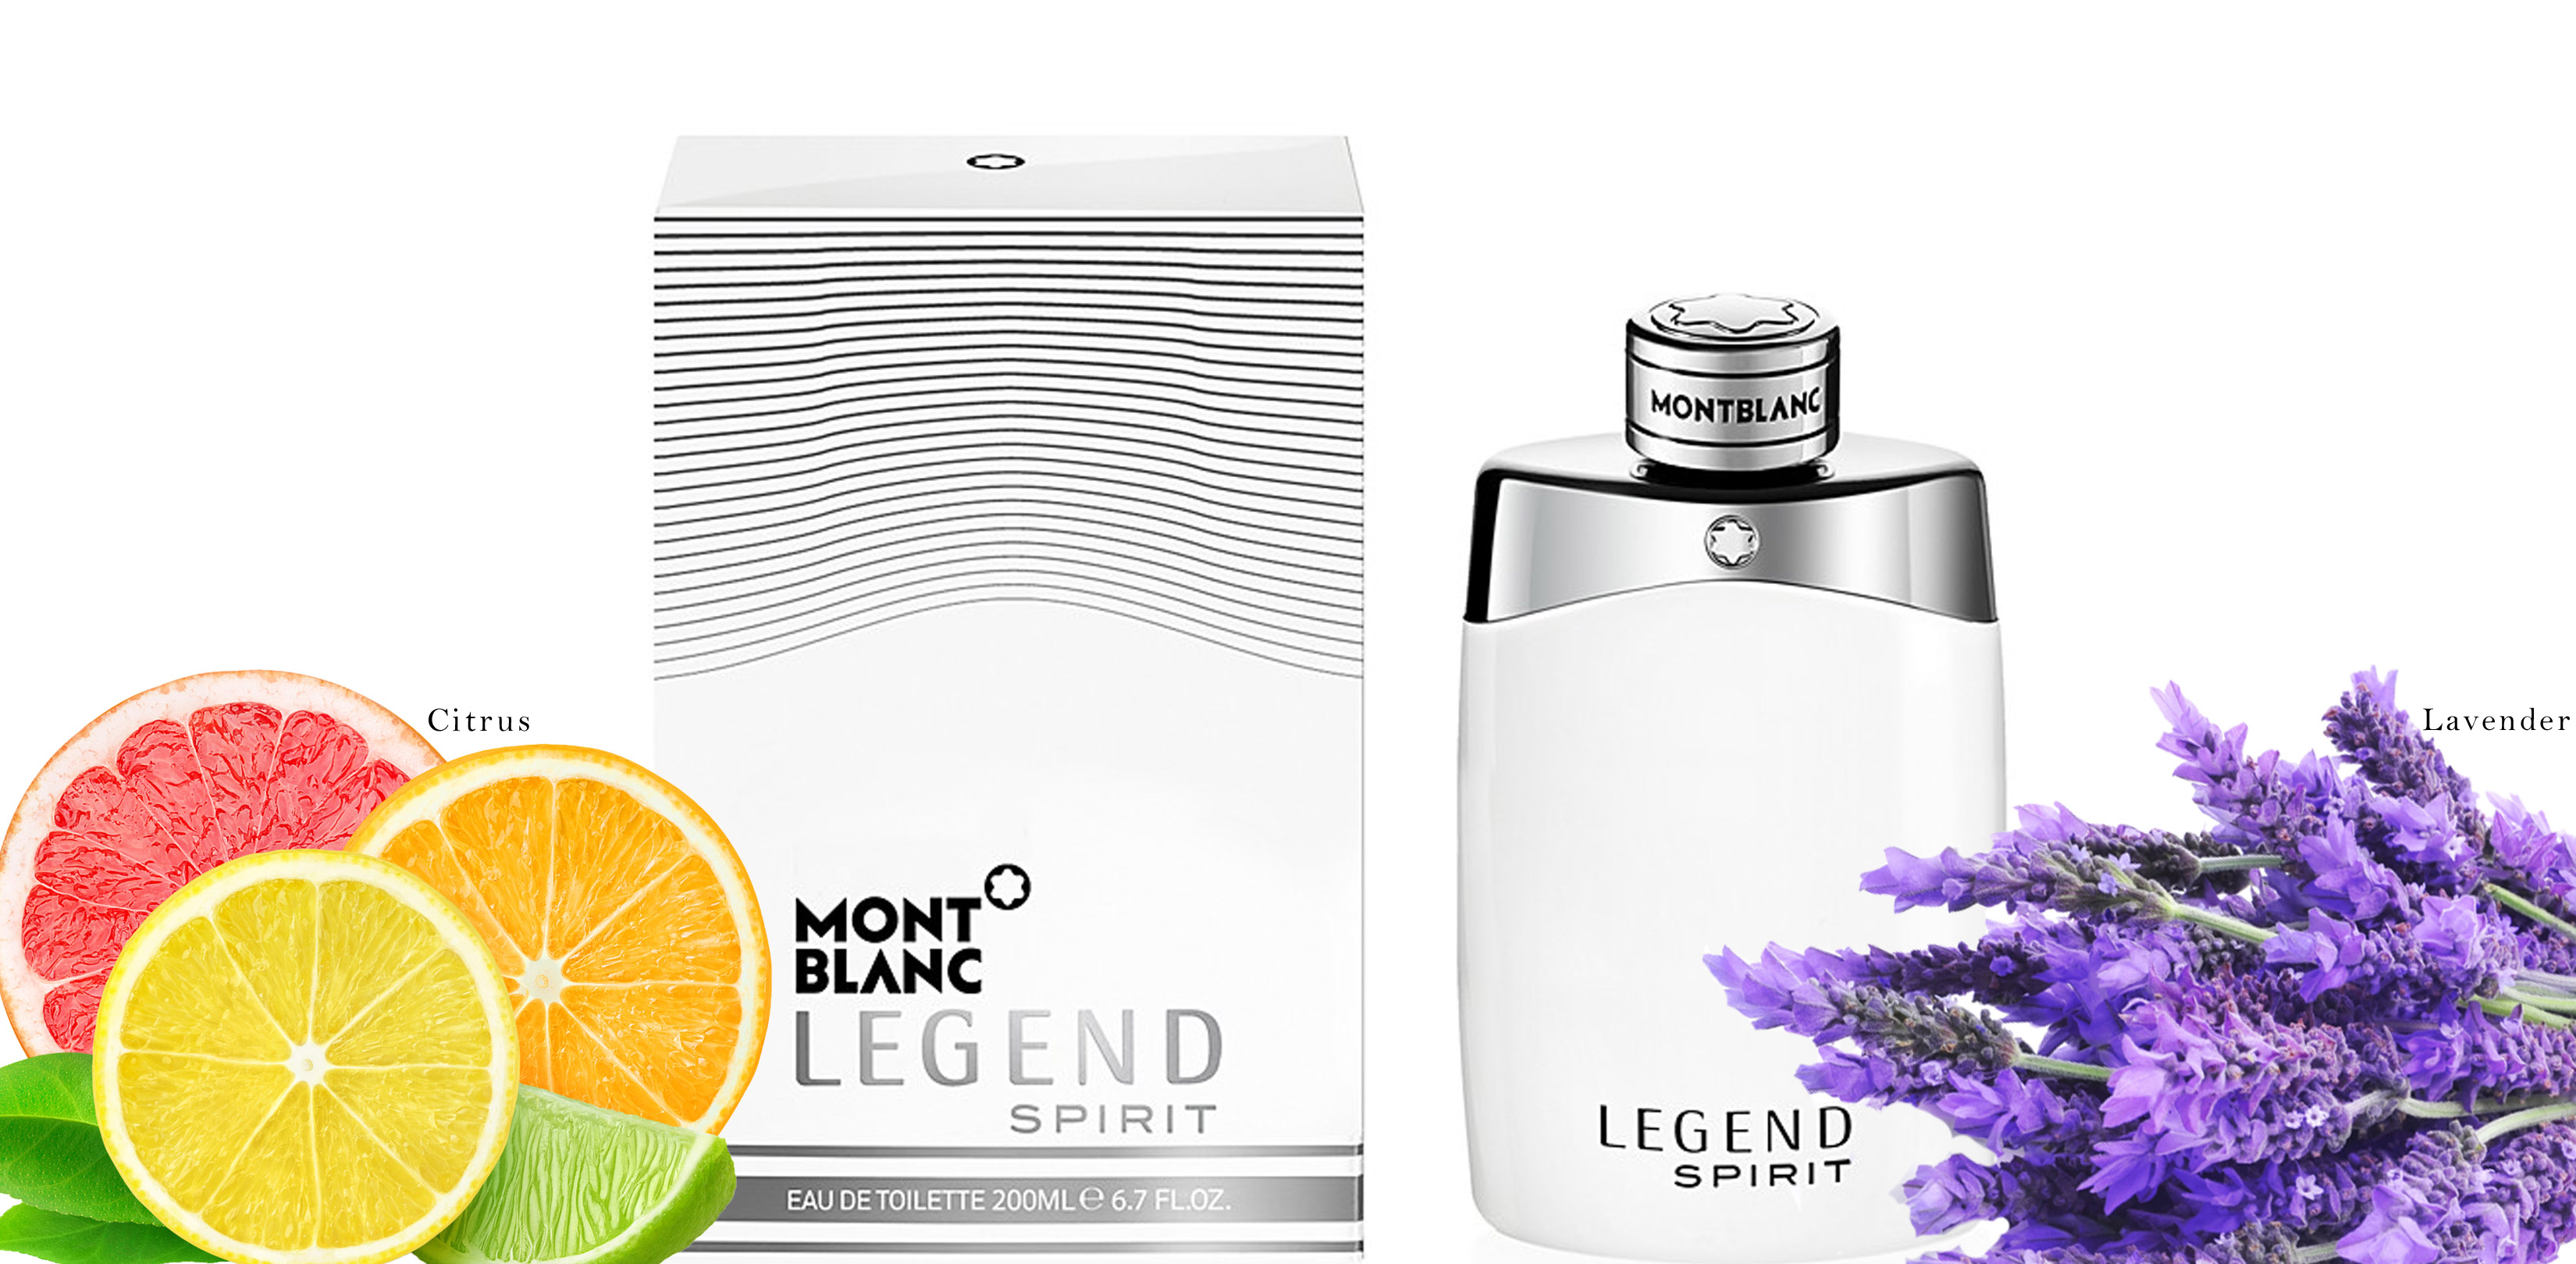 Montblanc legend spirit fragrance